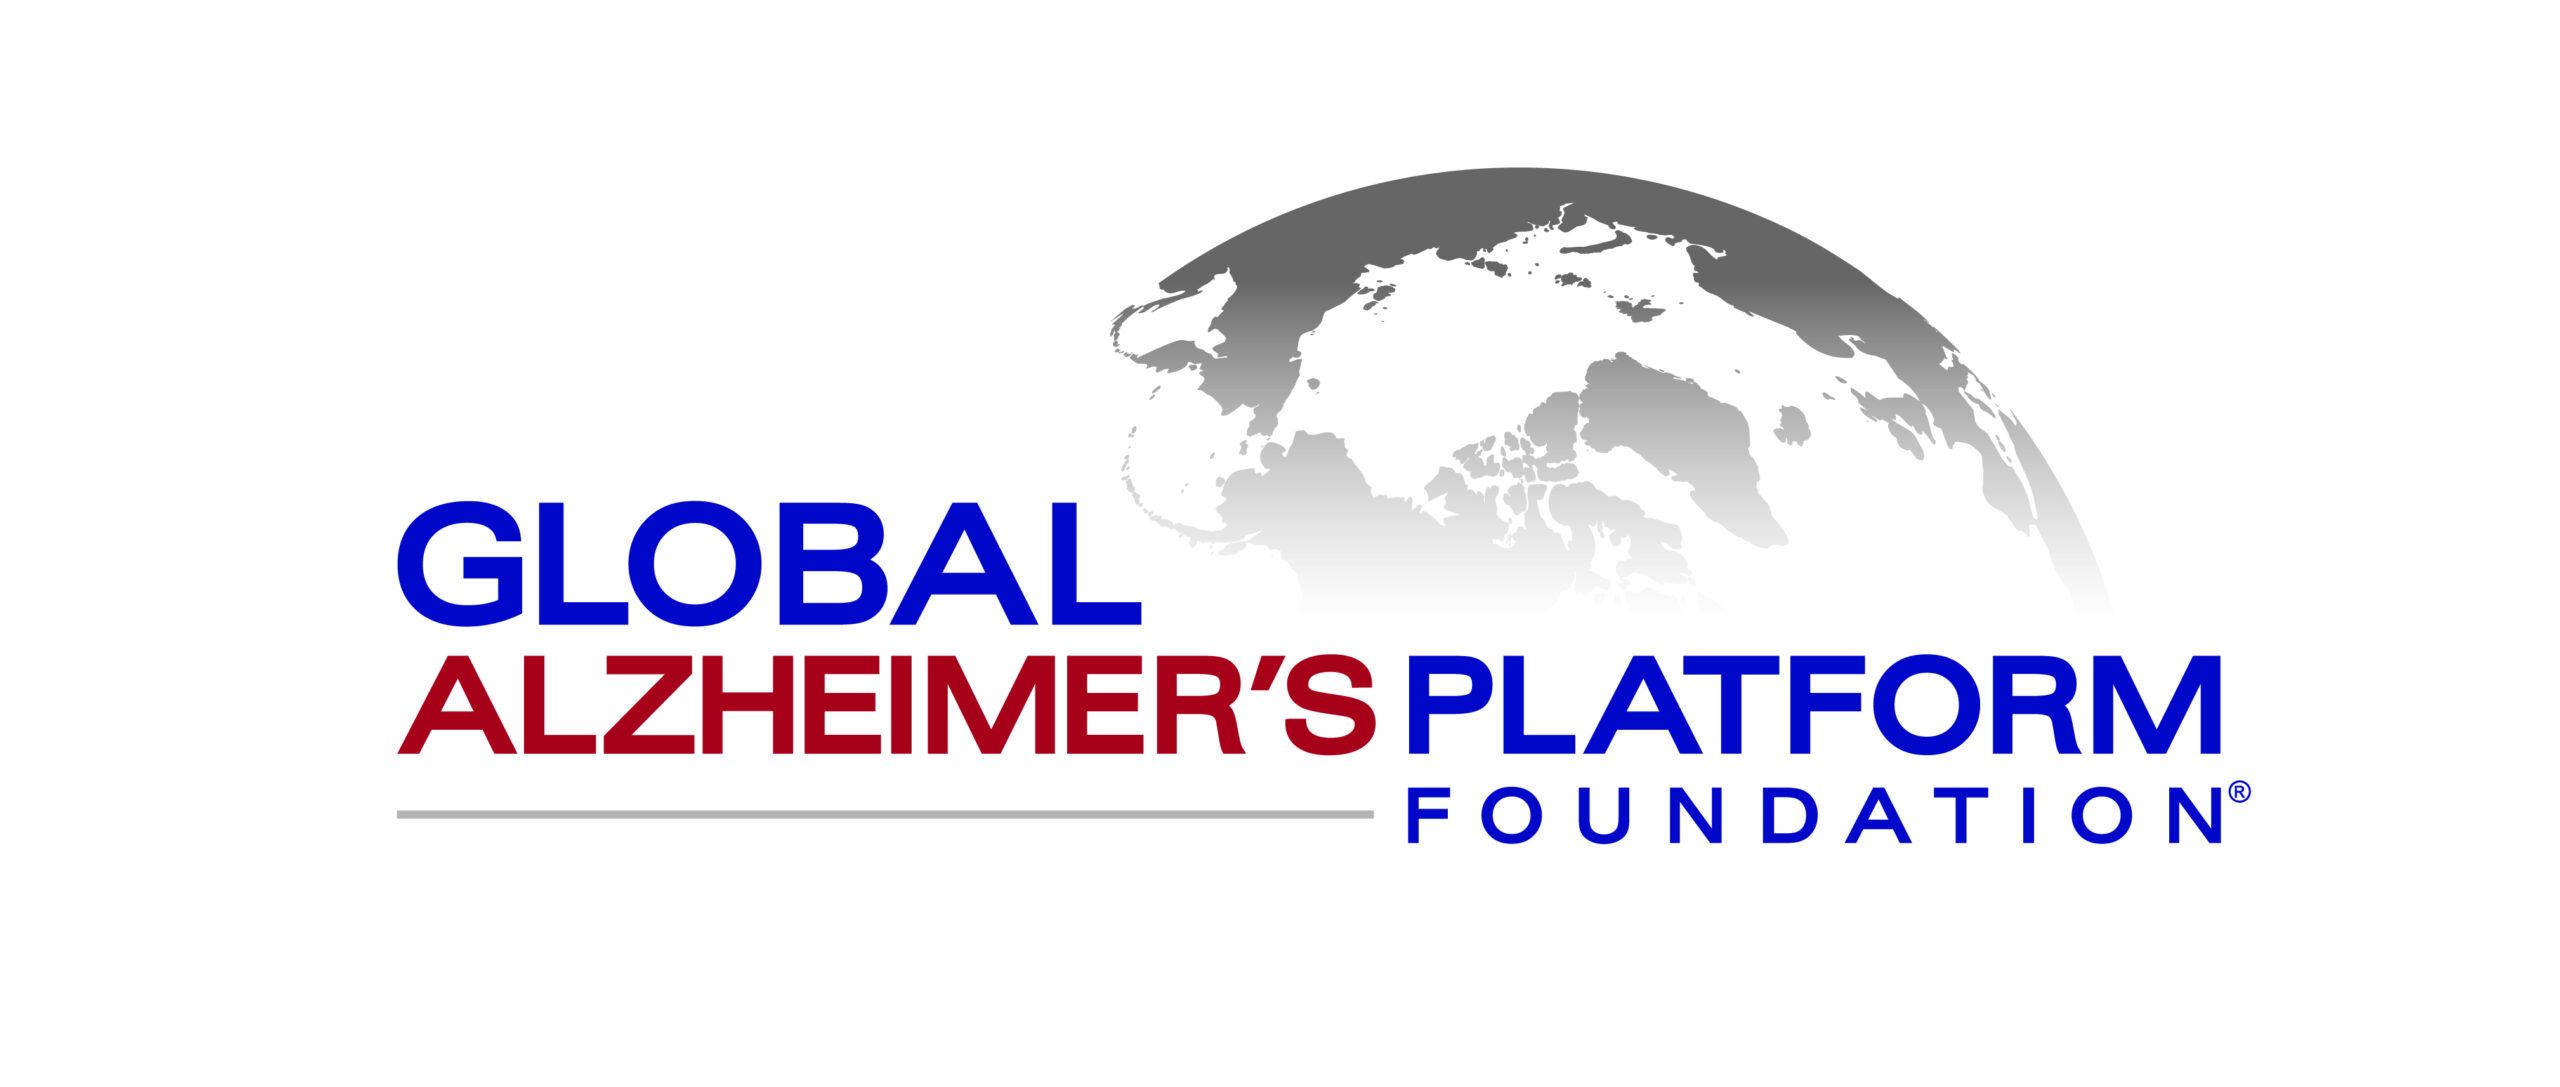 The Global Alzheimer's Platform Foundation (GAP) 